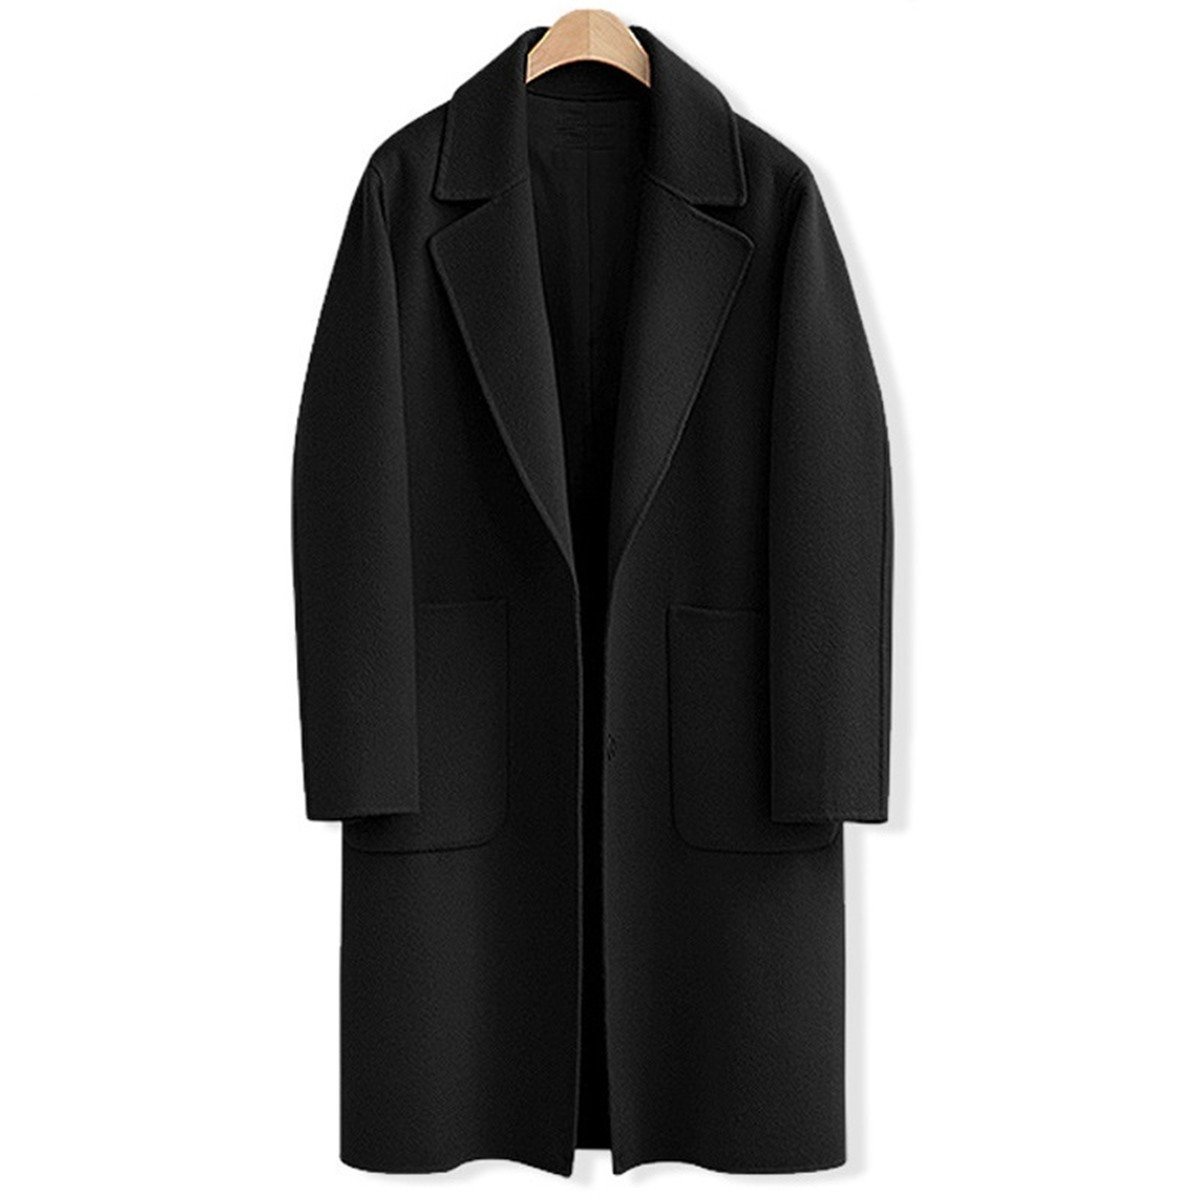 Xiaolv88 Long Oversize Wool Coats for Women Winter Button Closure Camel Color Outwear